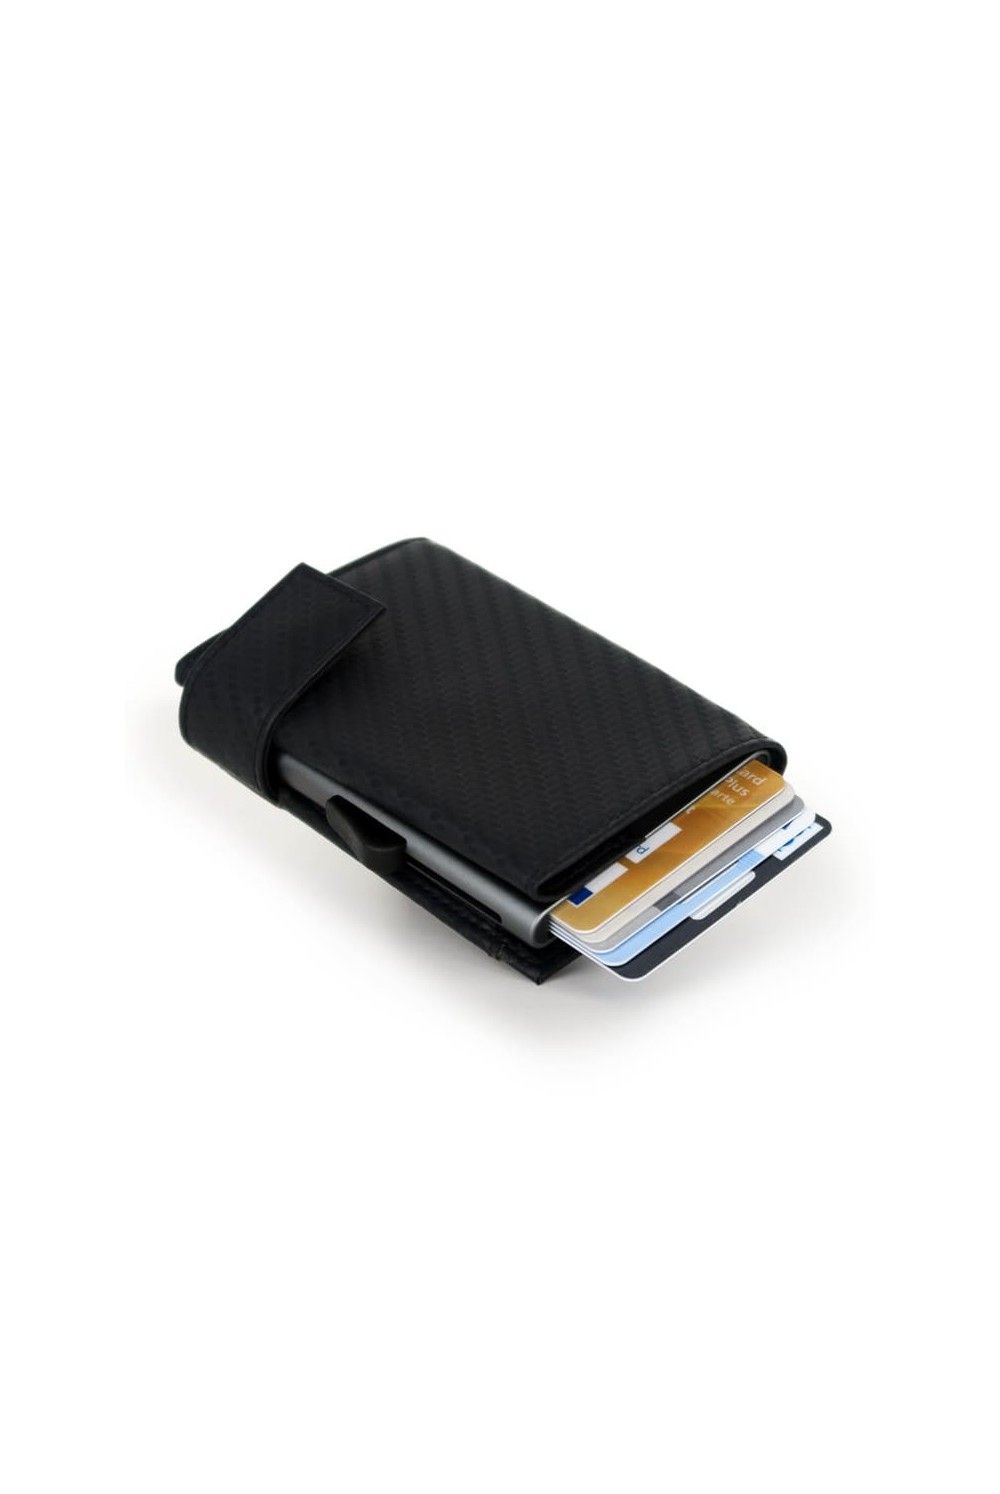 SecWal Card Case RV Leather Carbon Black